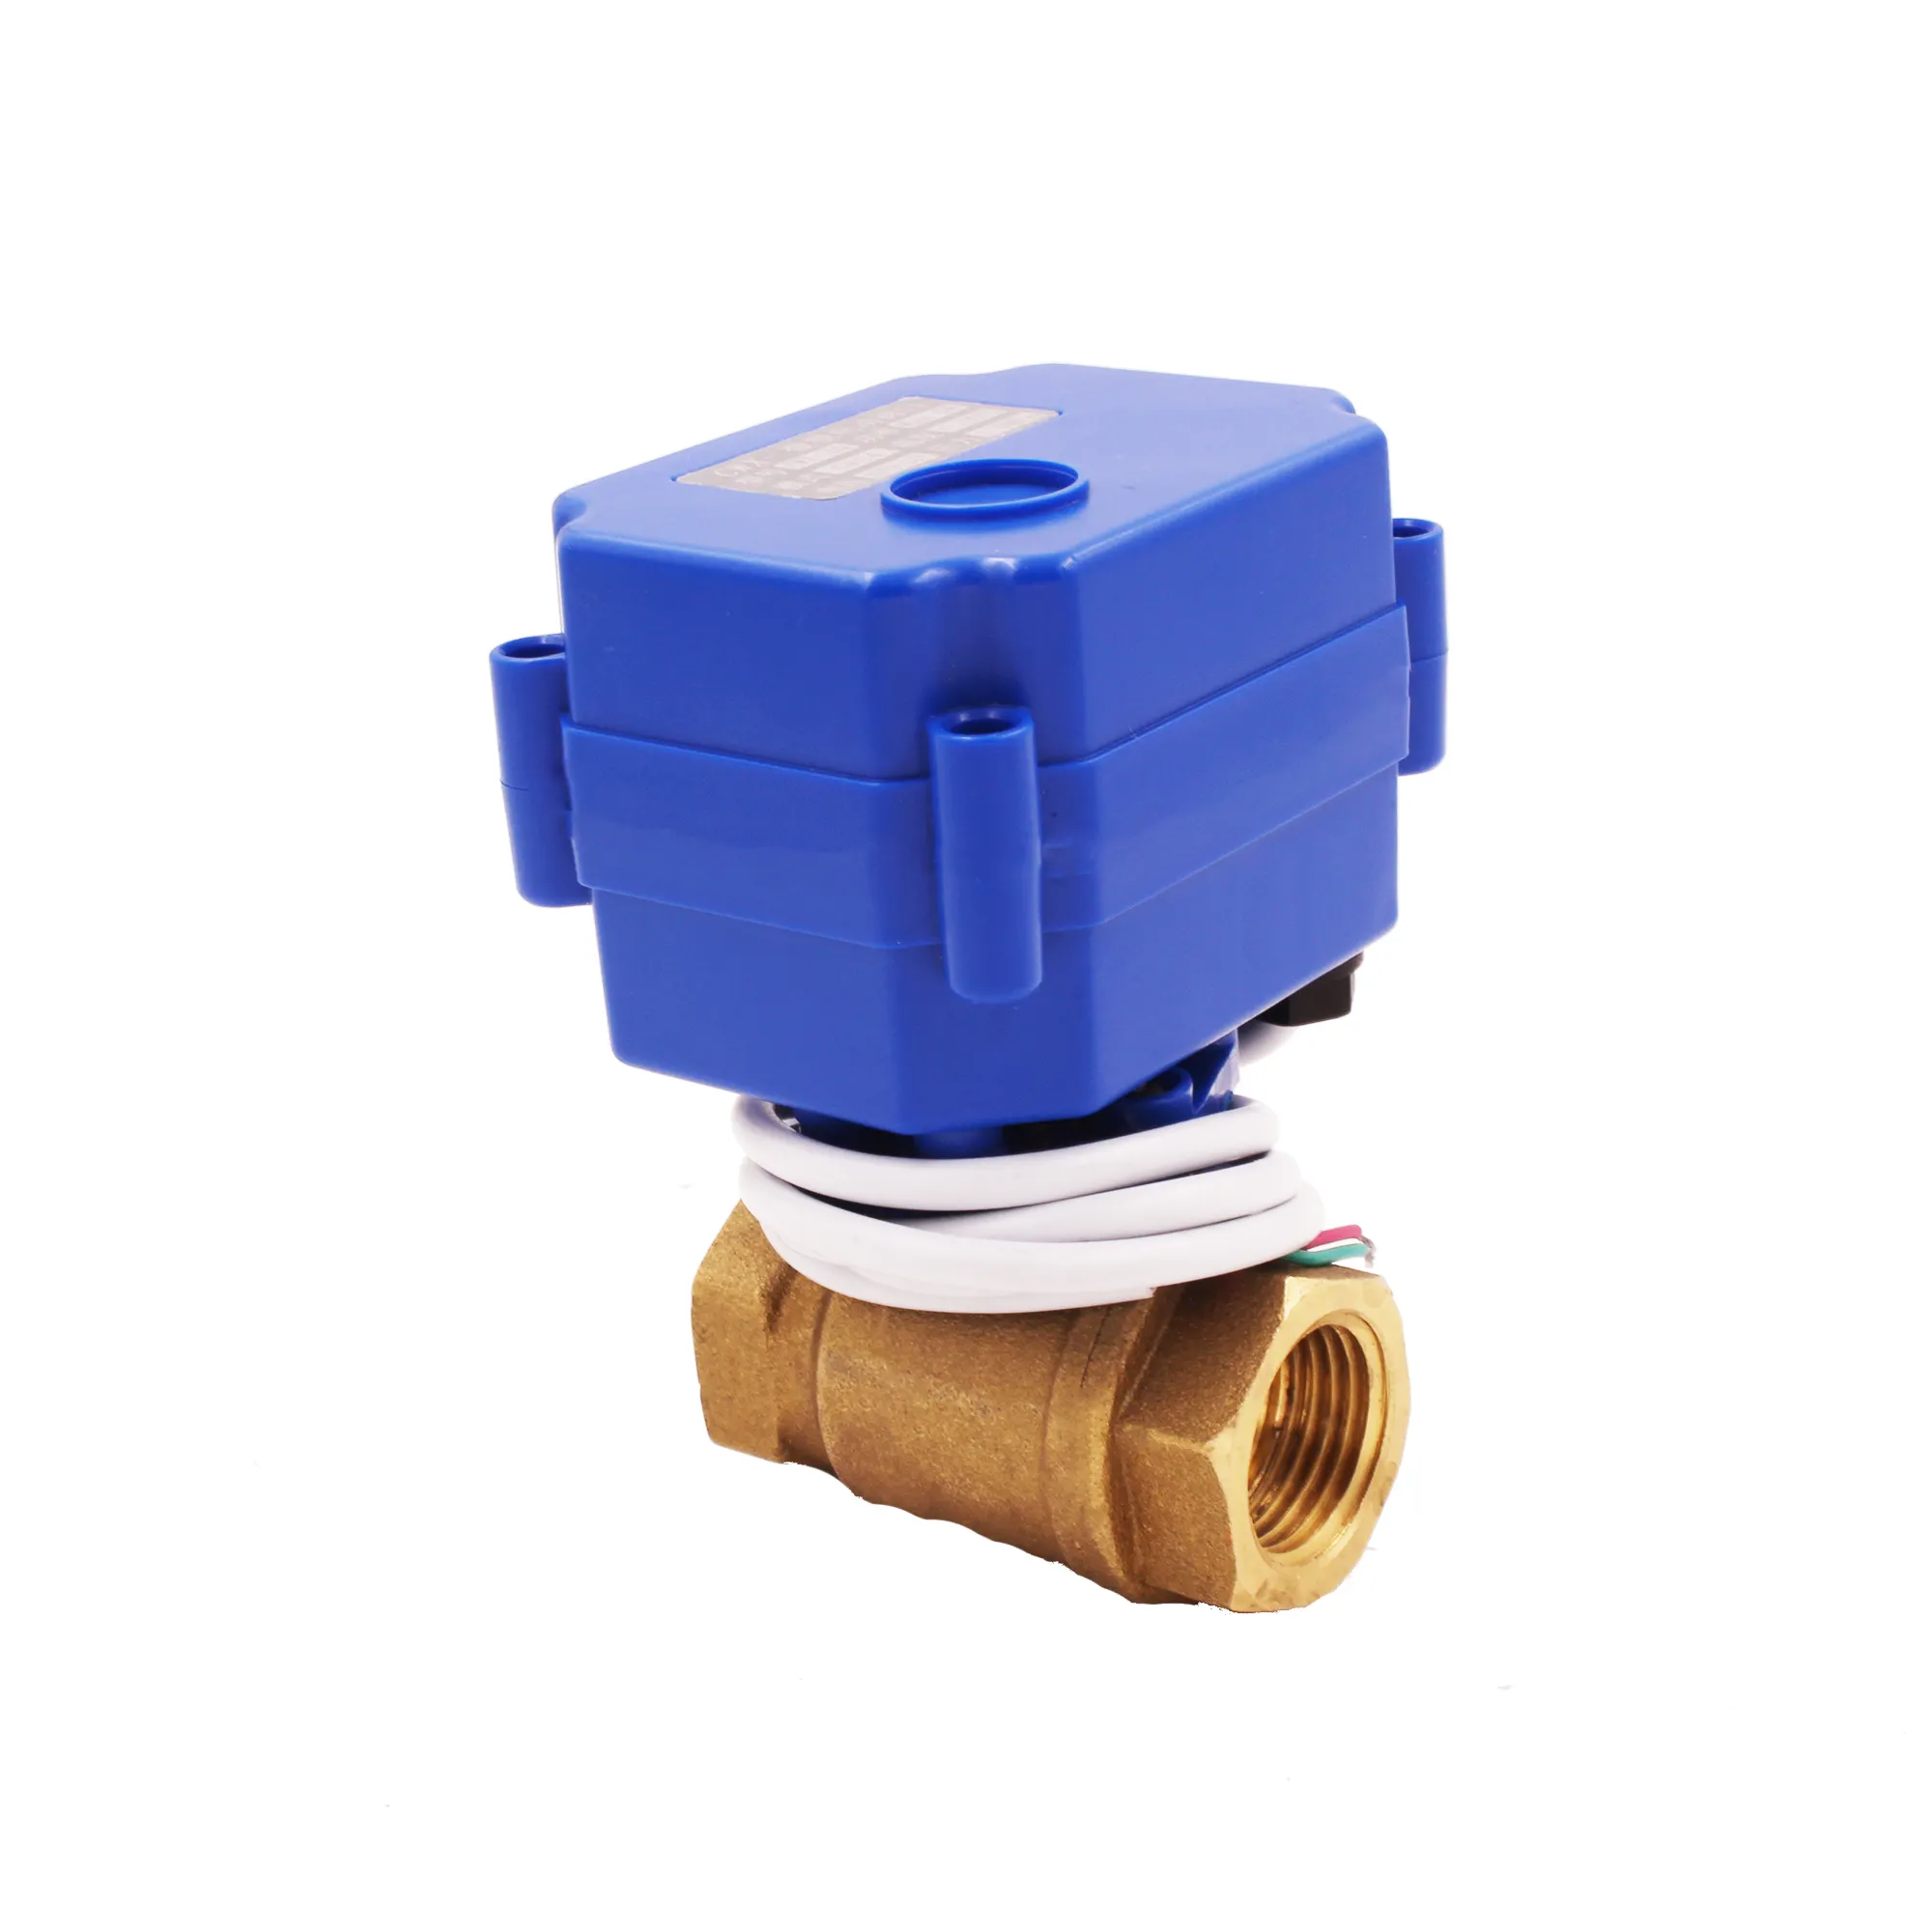 CWX-15 Q/N motor actuator Torqur 2NM Full port 2 way mini electric ball valve for water treatment. smart watermeter,water filter